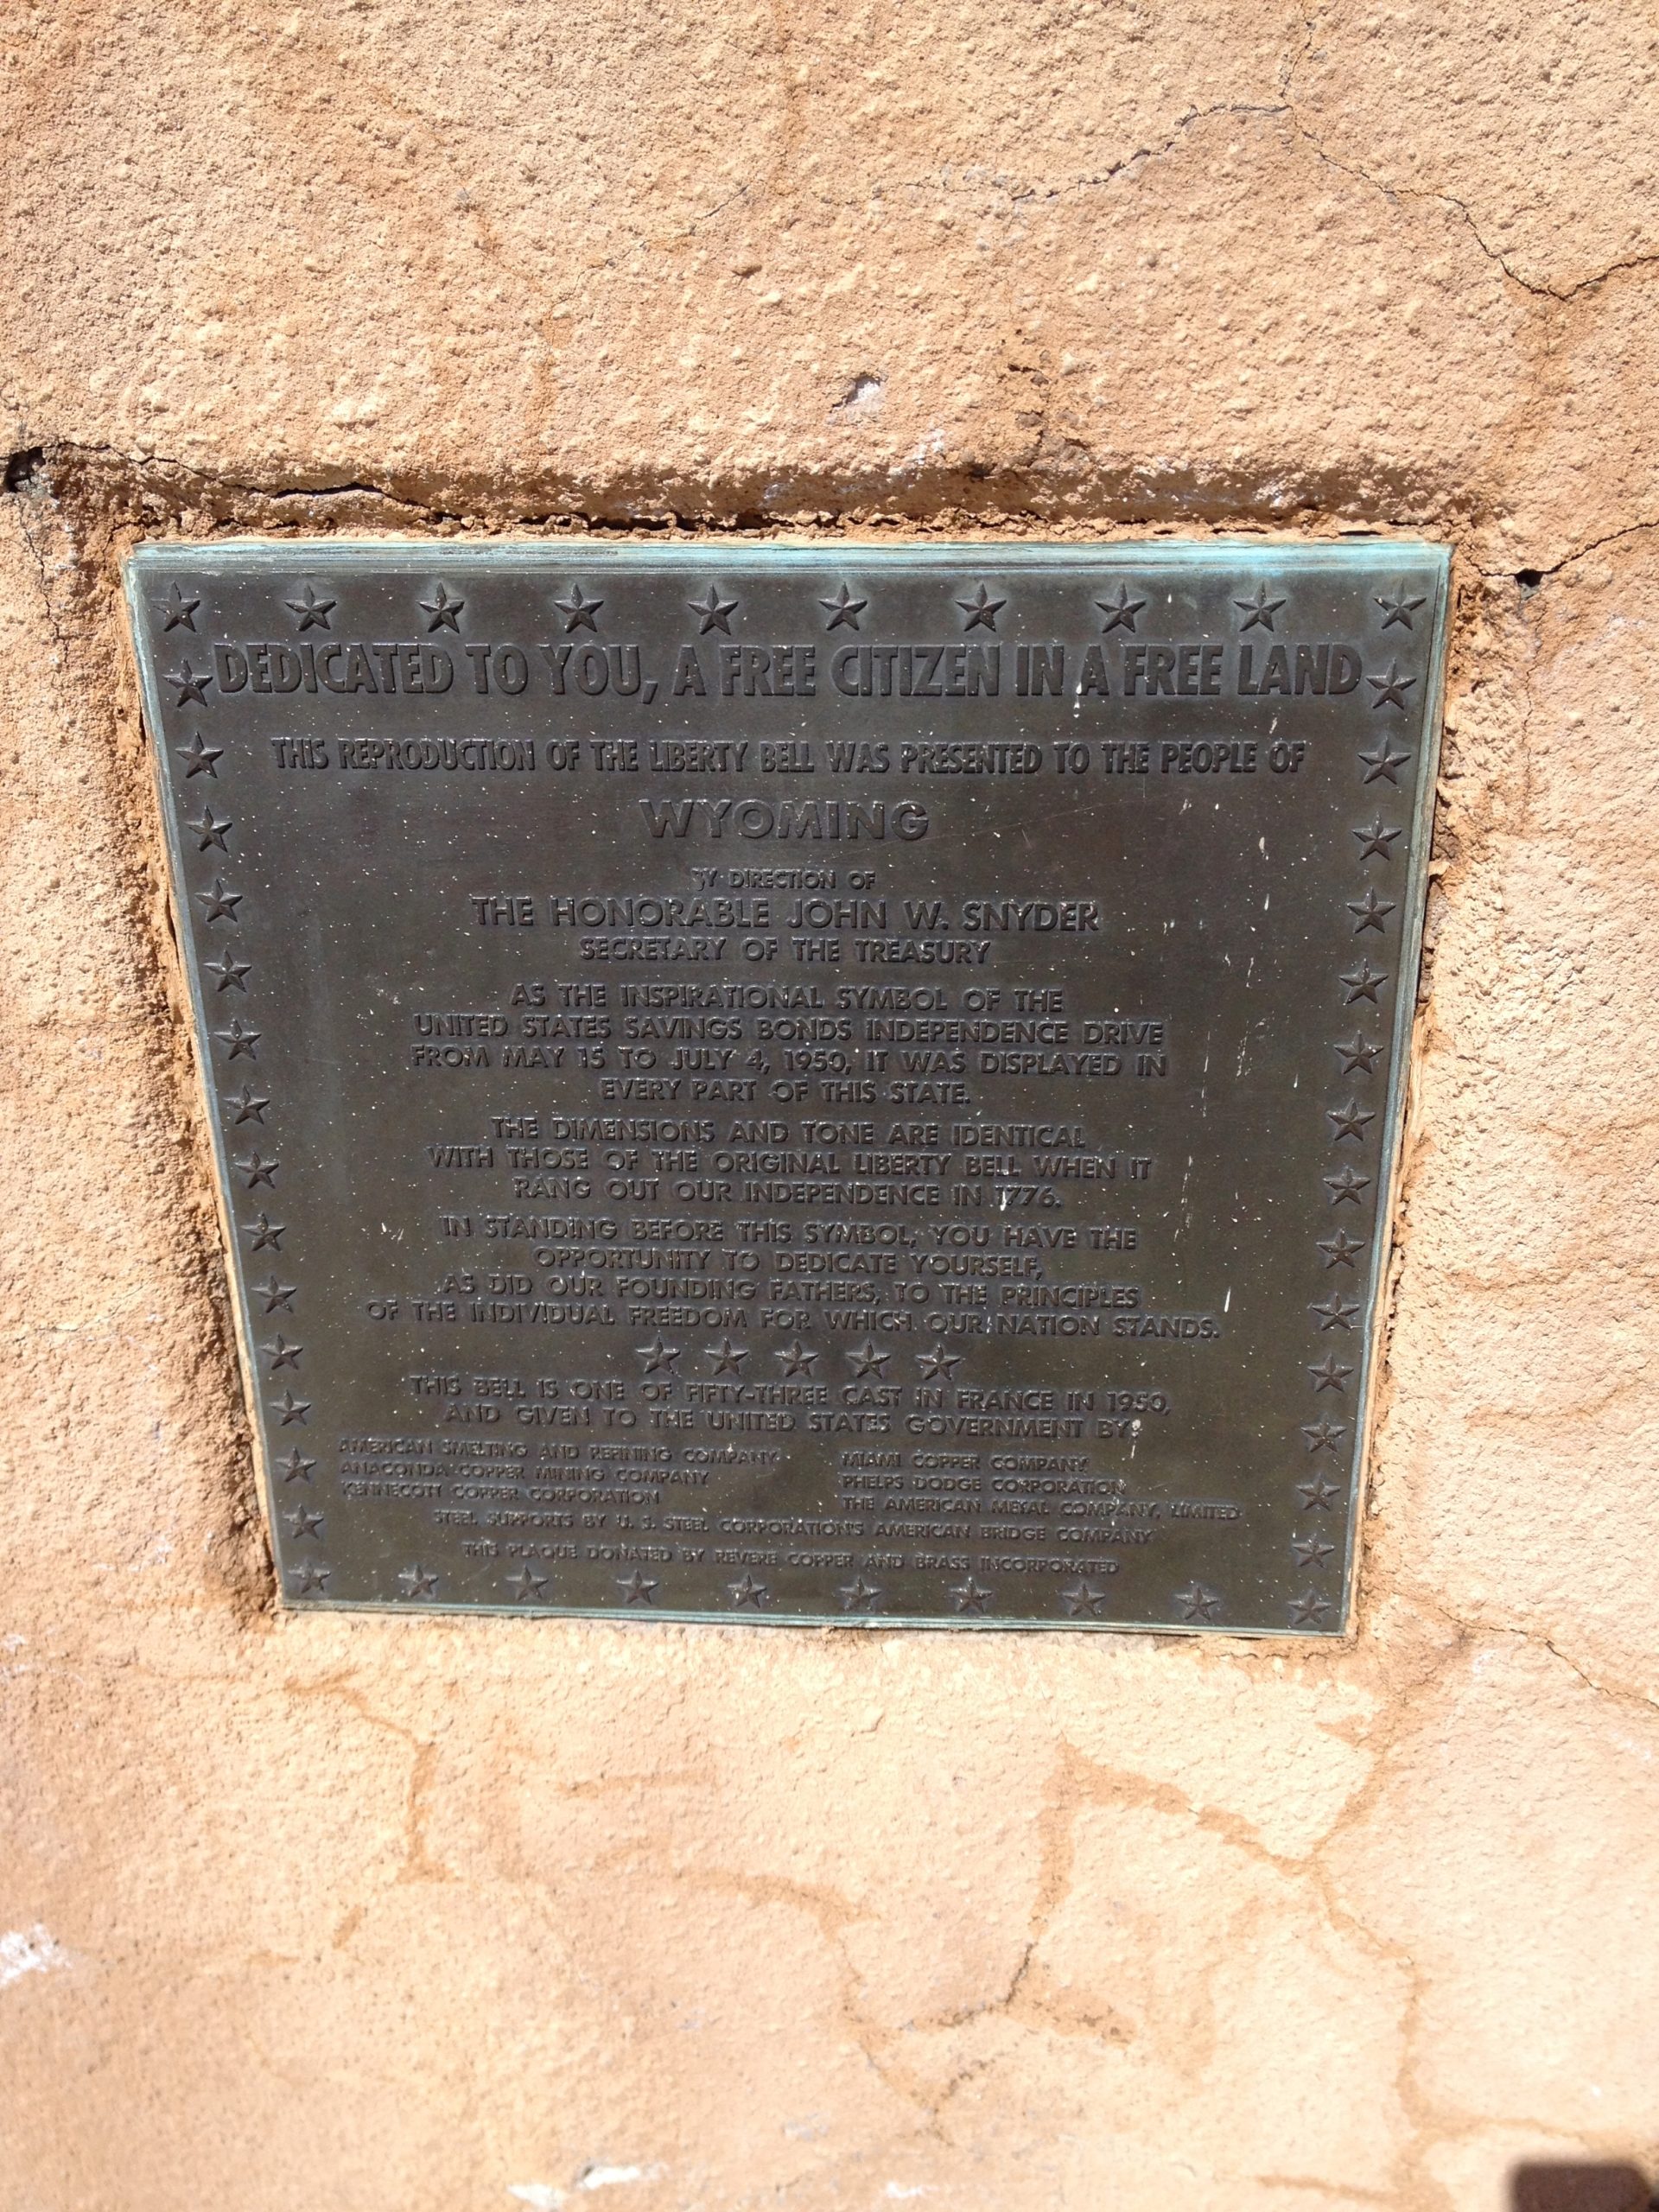 Original dedication plaque for the Wyoming Liberty Bell Replica